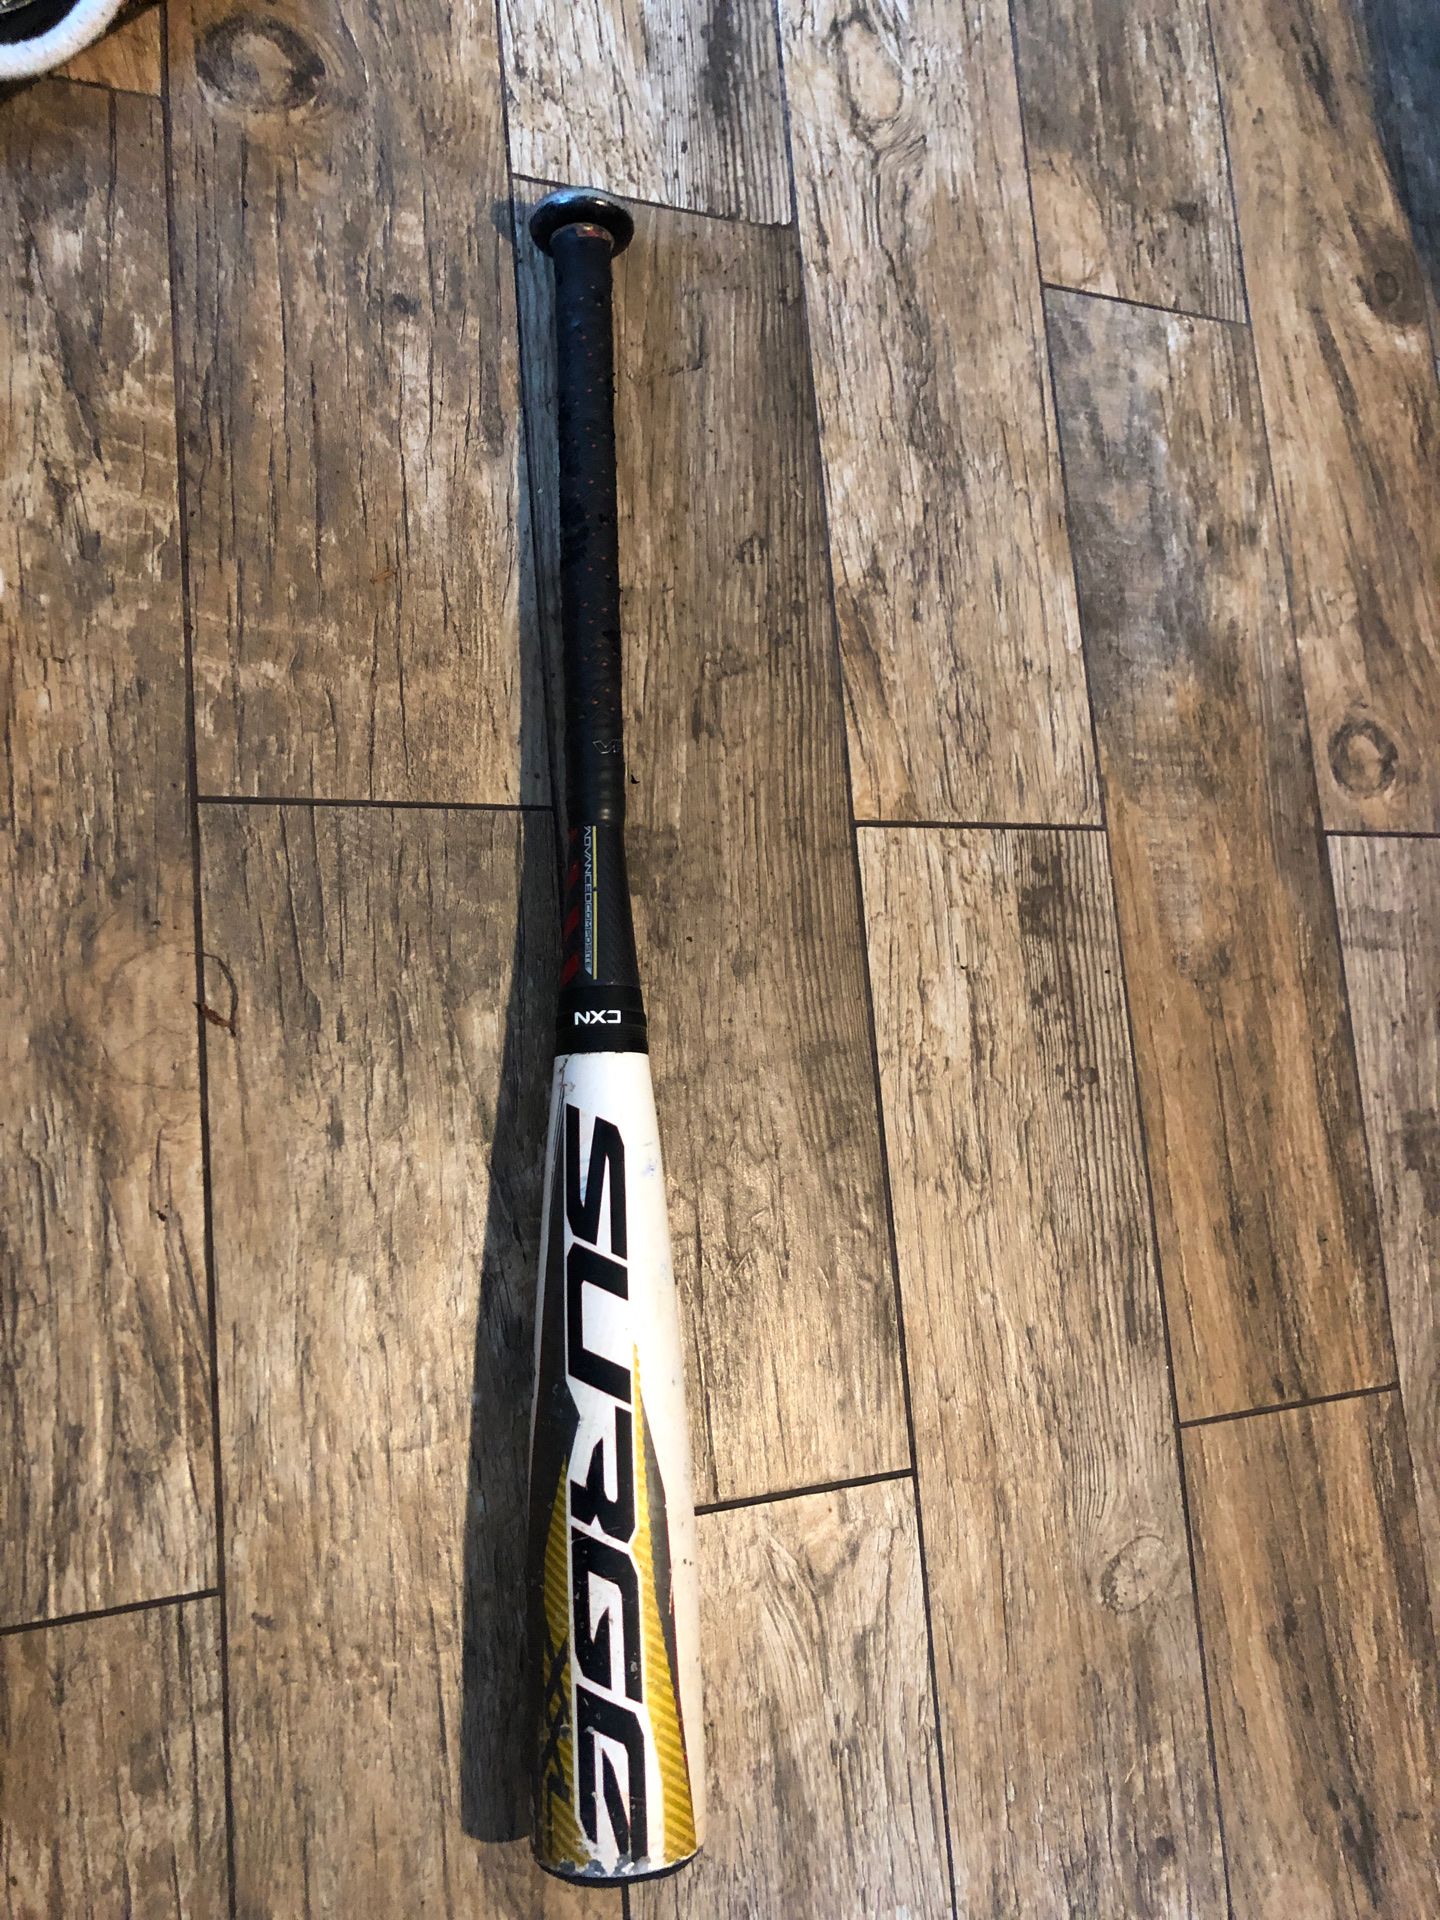 Easton surge XXL 27 inch 17 ounce -10 baseball bat